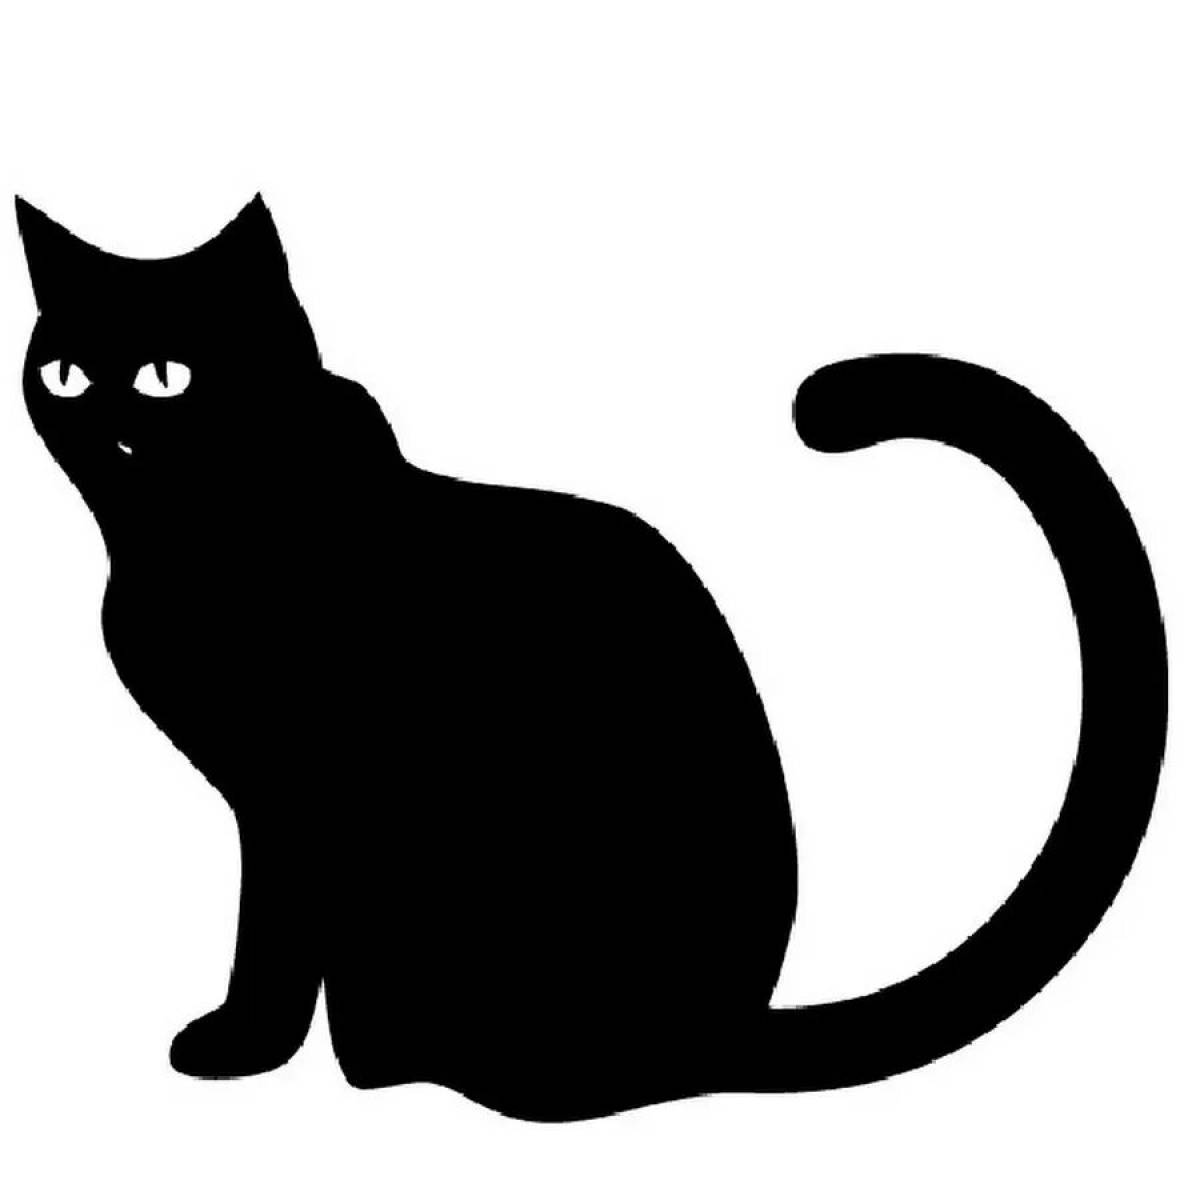 Vigilant black cat coloring page